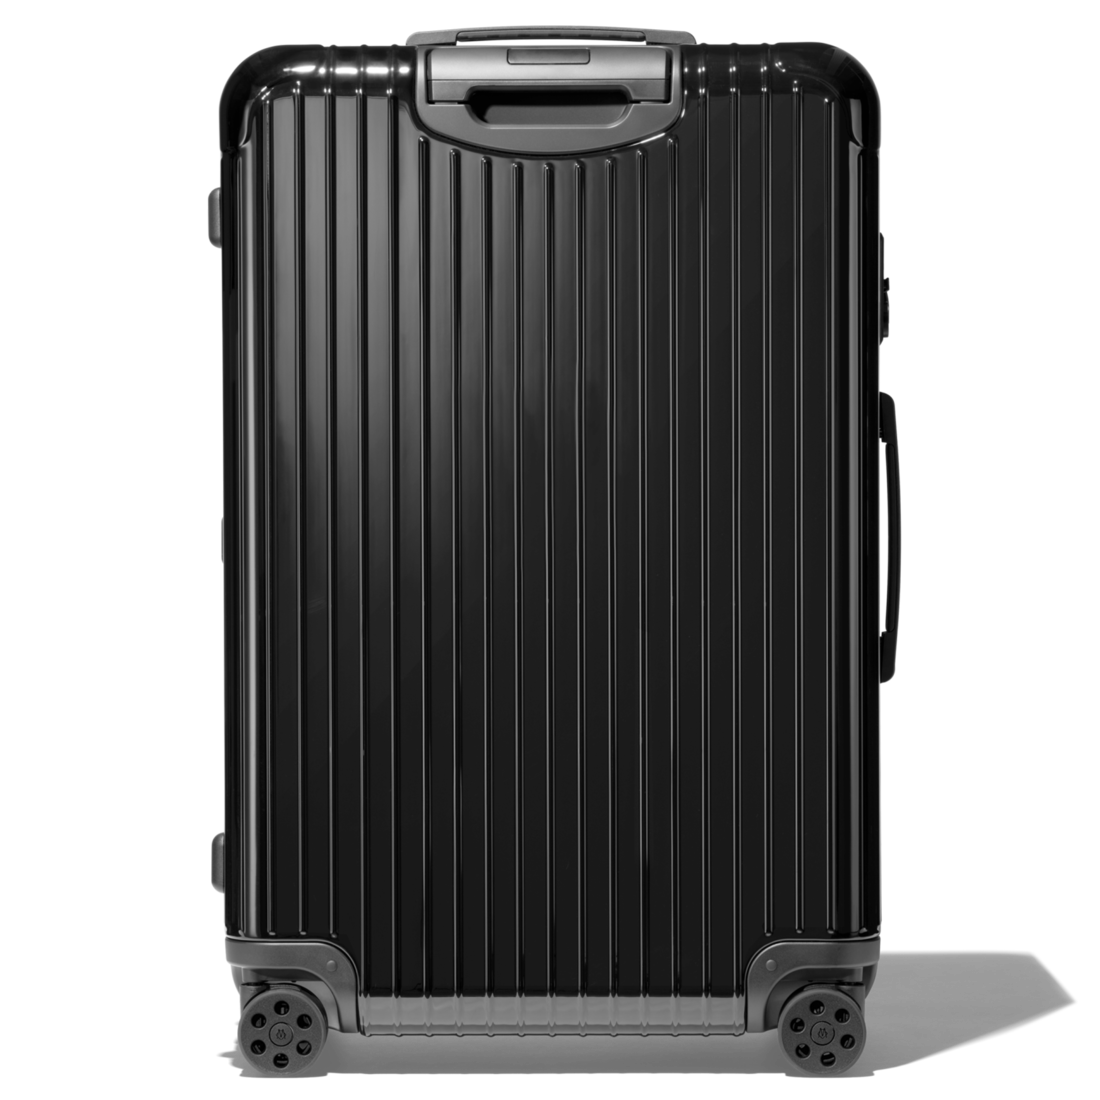 rimowa luggage size in cm